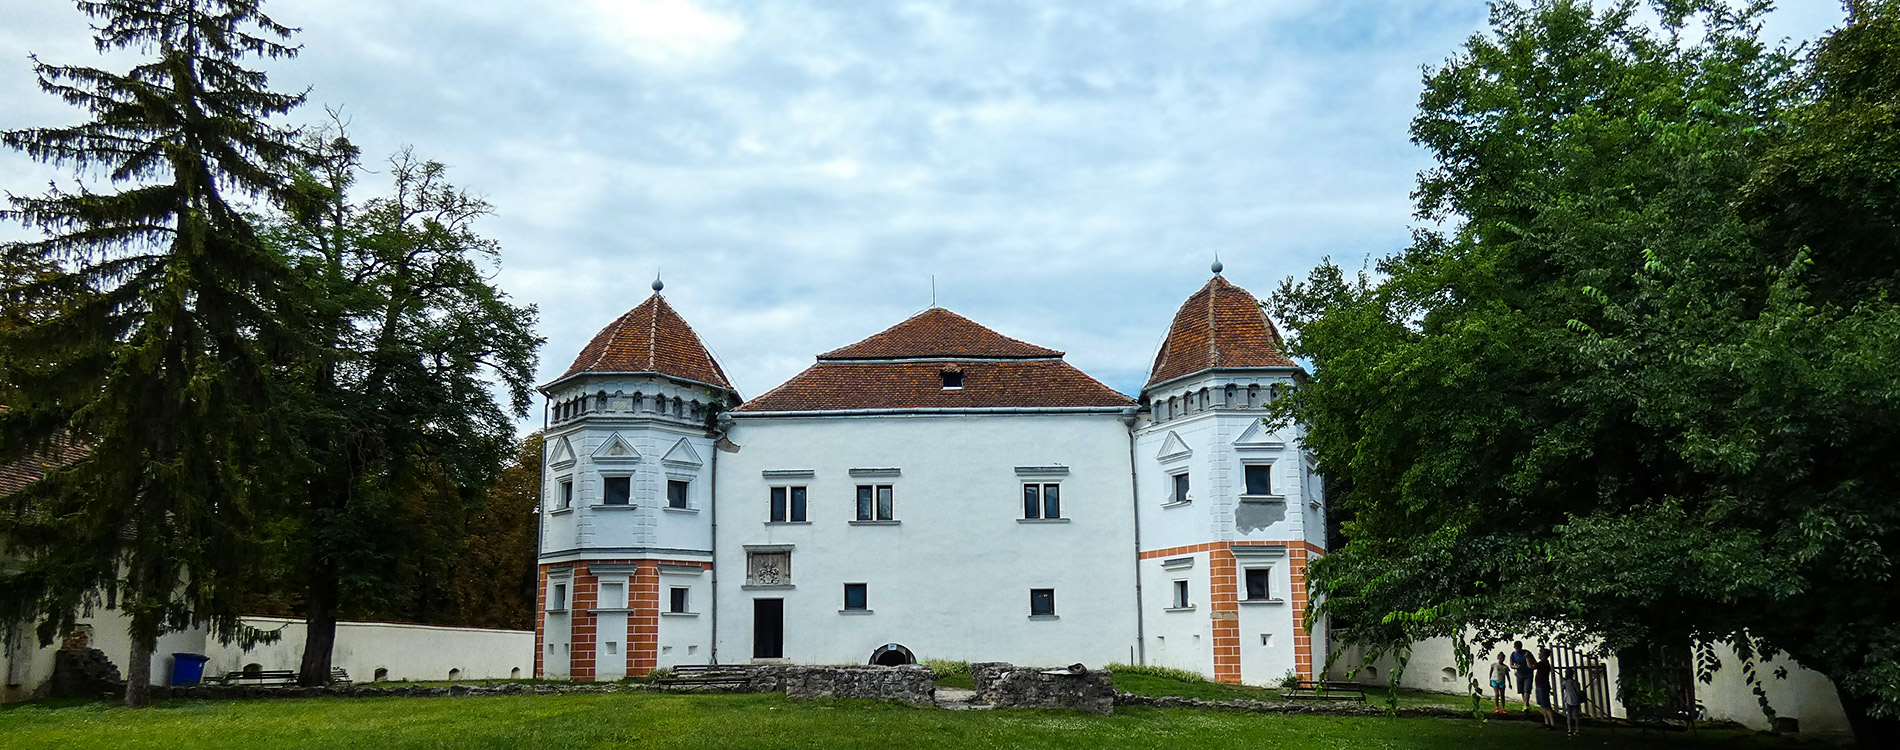 Pácin - Magyar várak, kastélyok, templomok leírásai, galériái